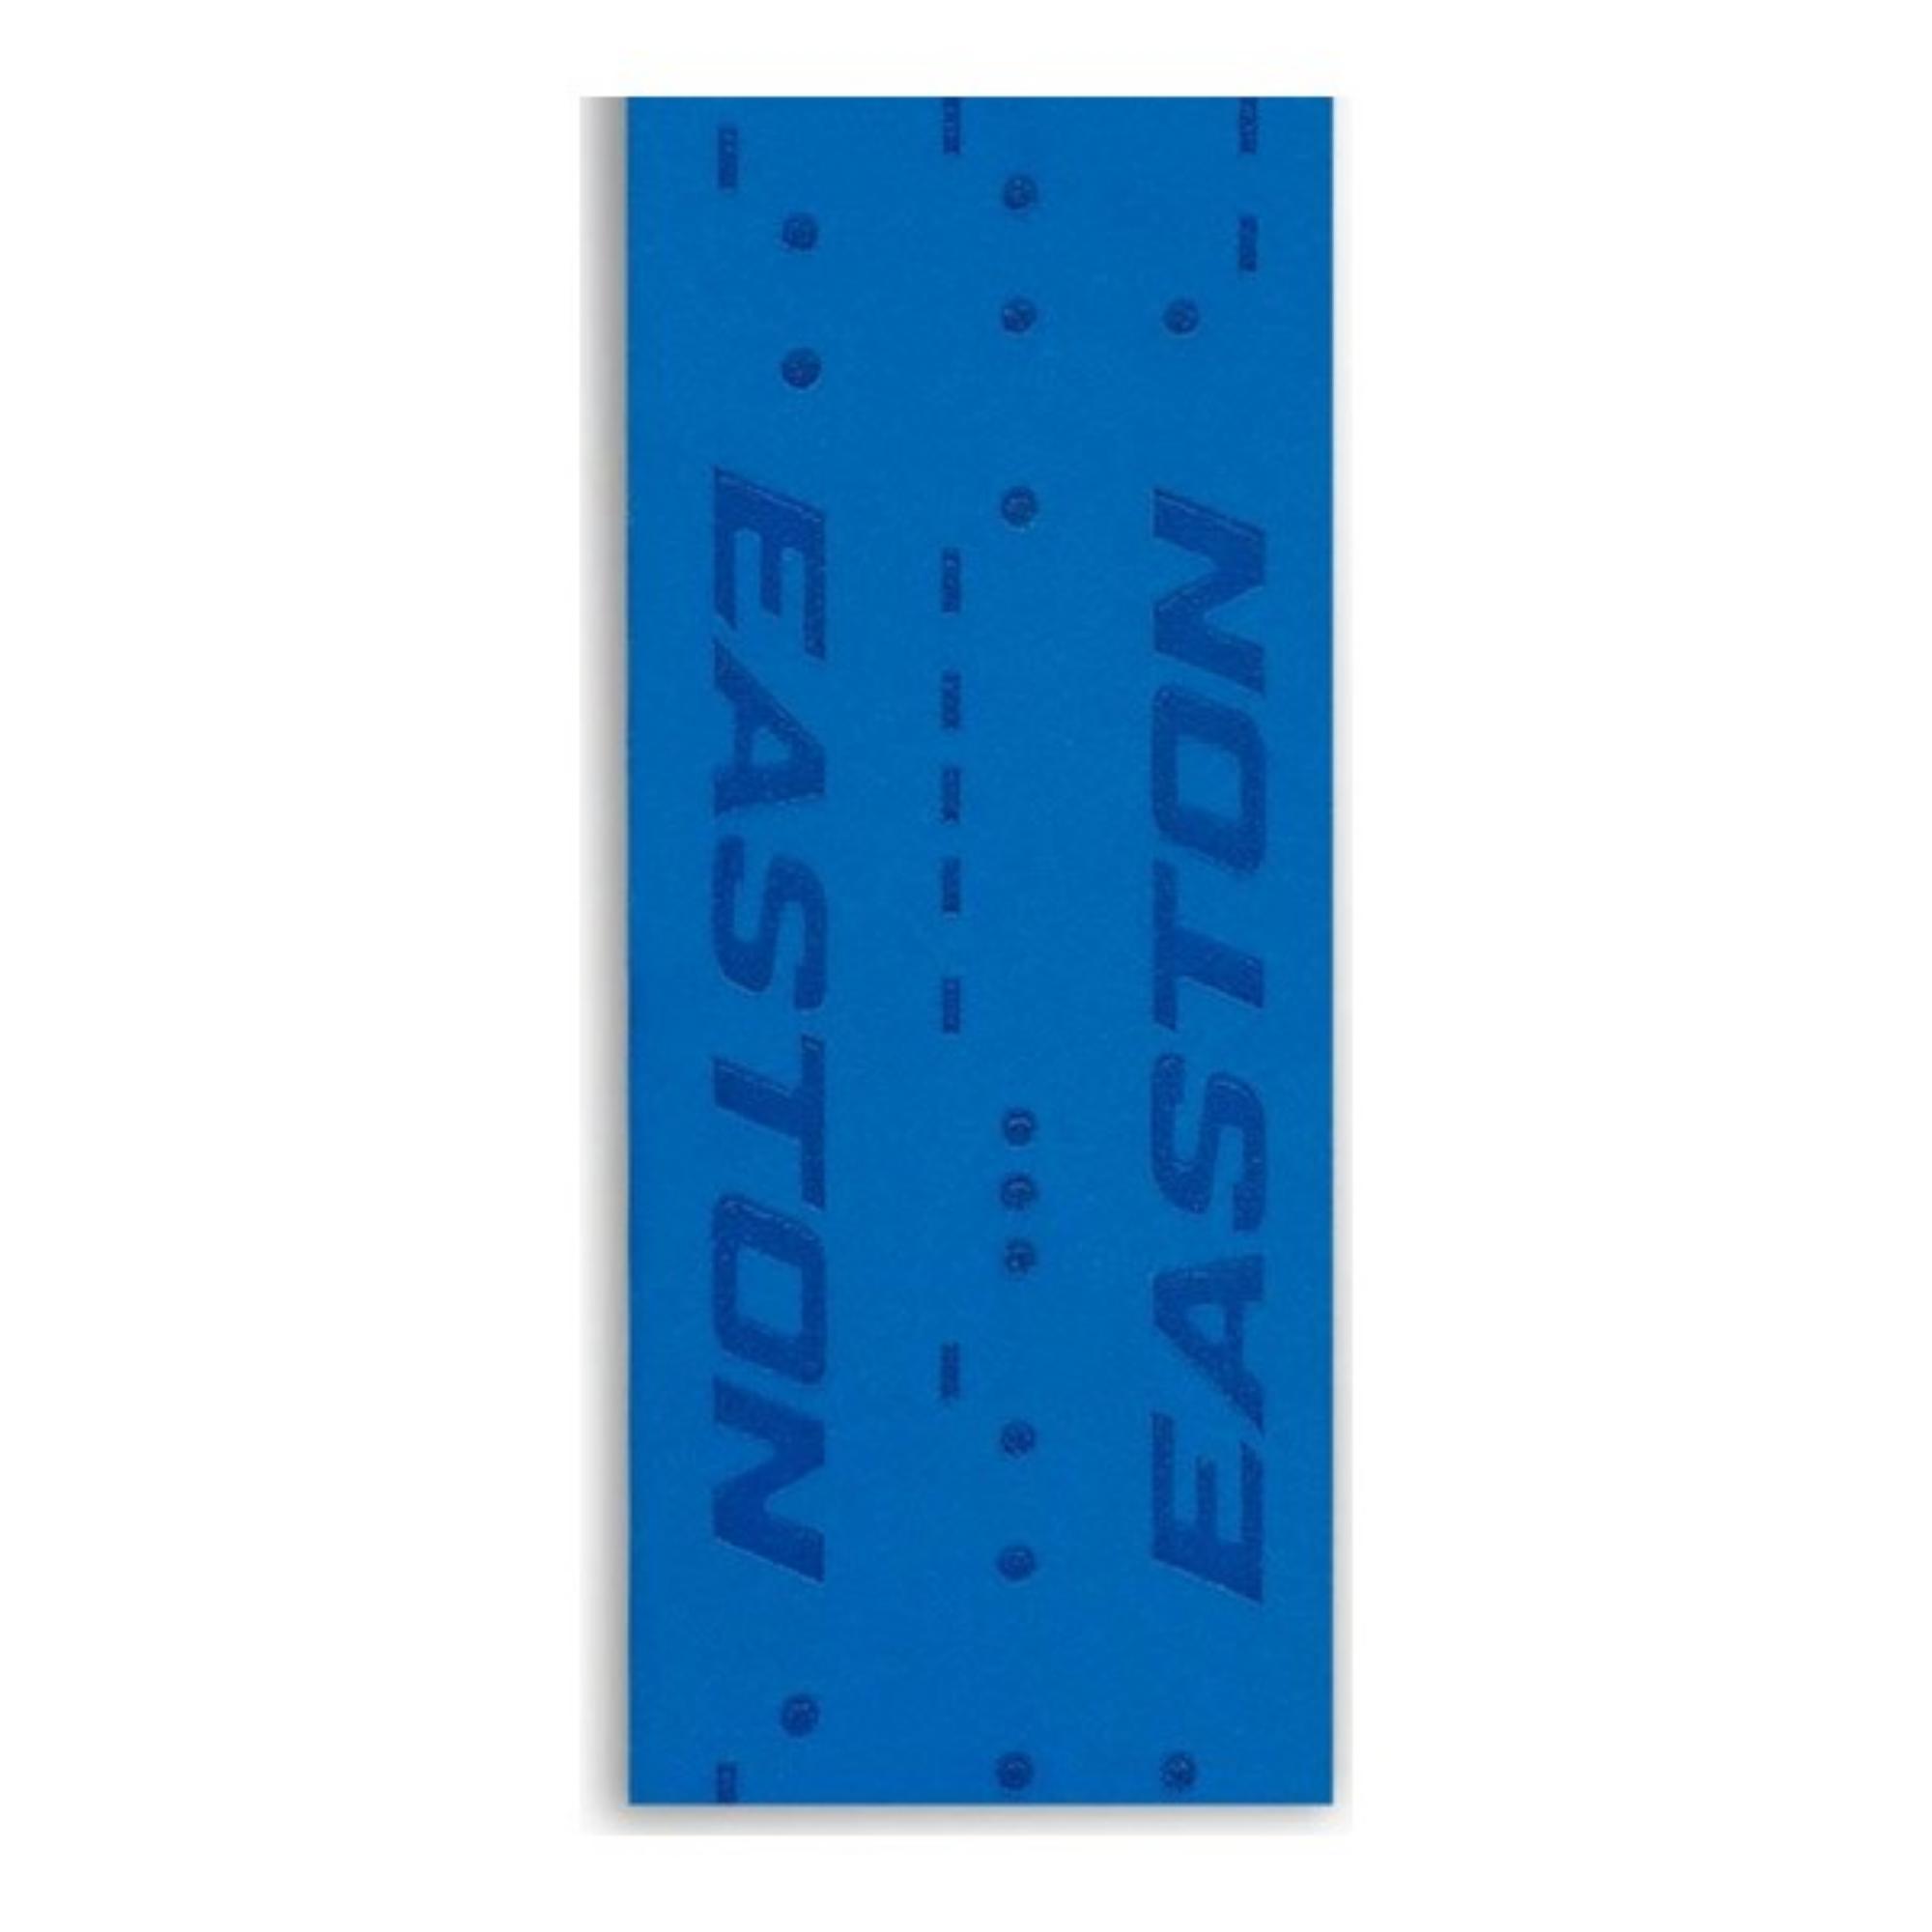 Easton Microfibre Bar Tape